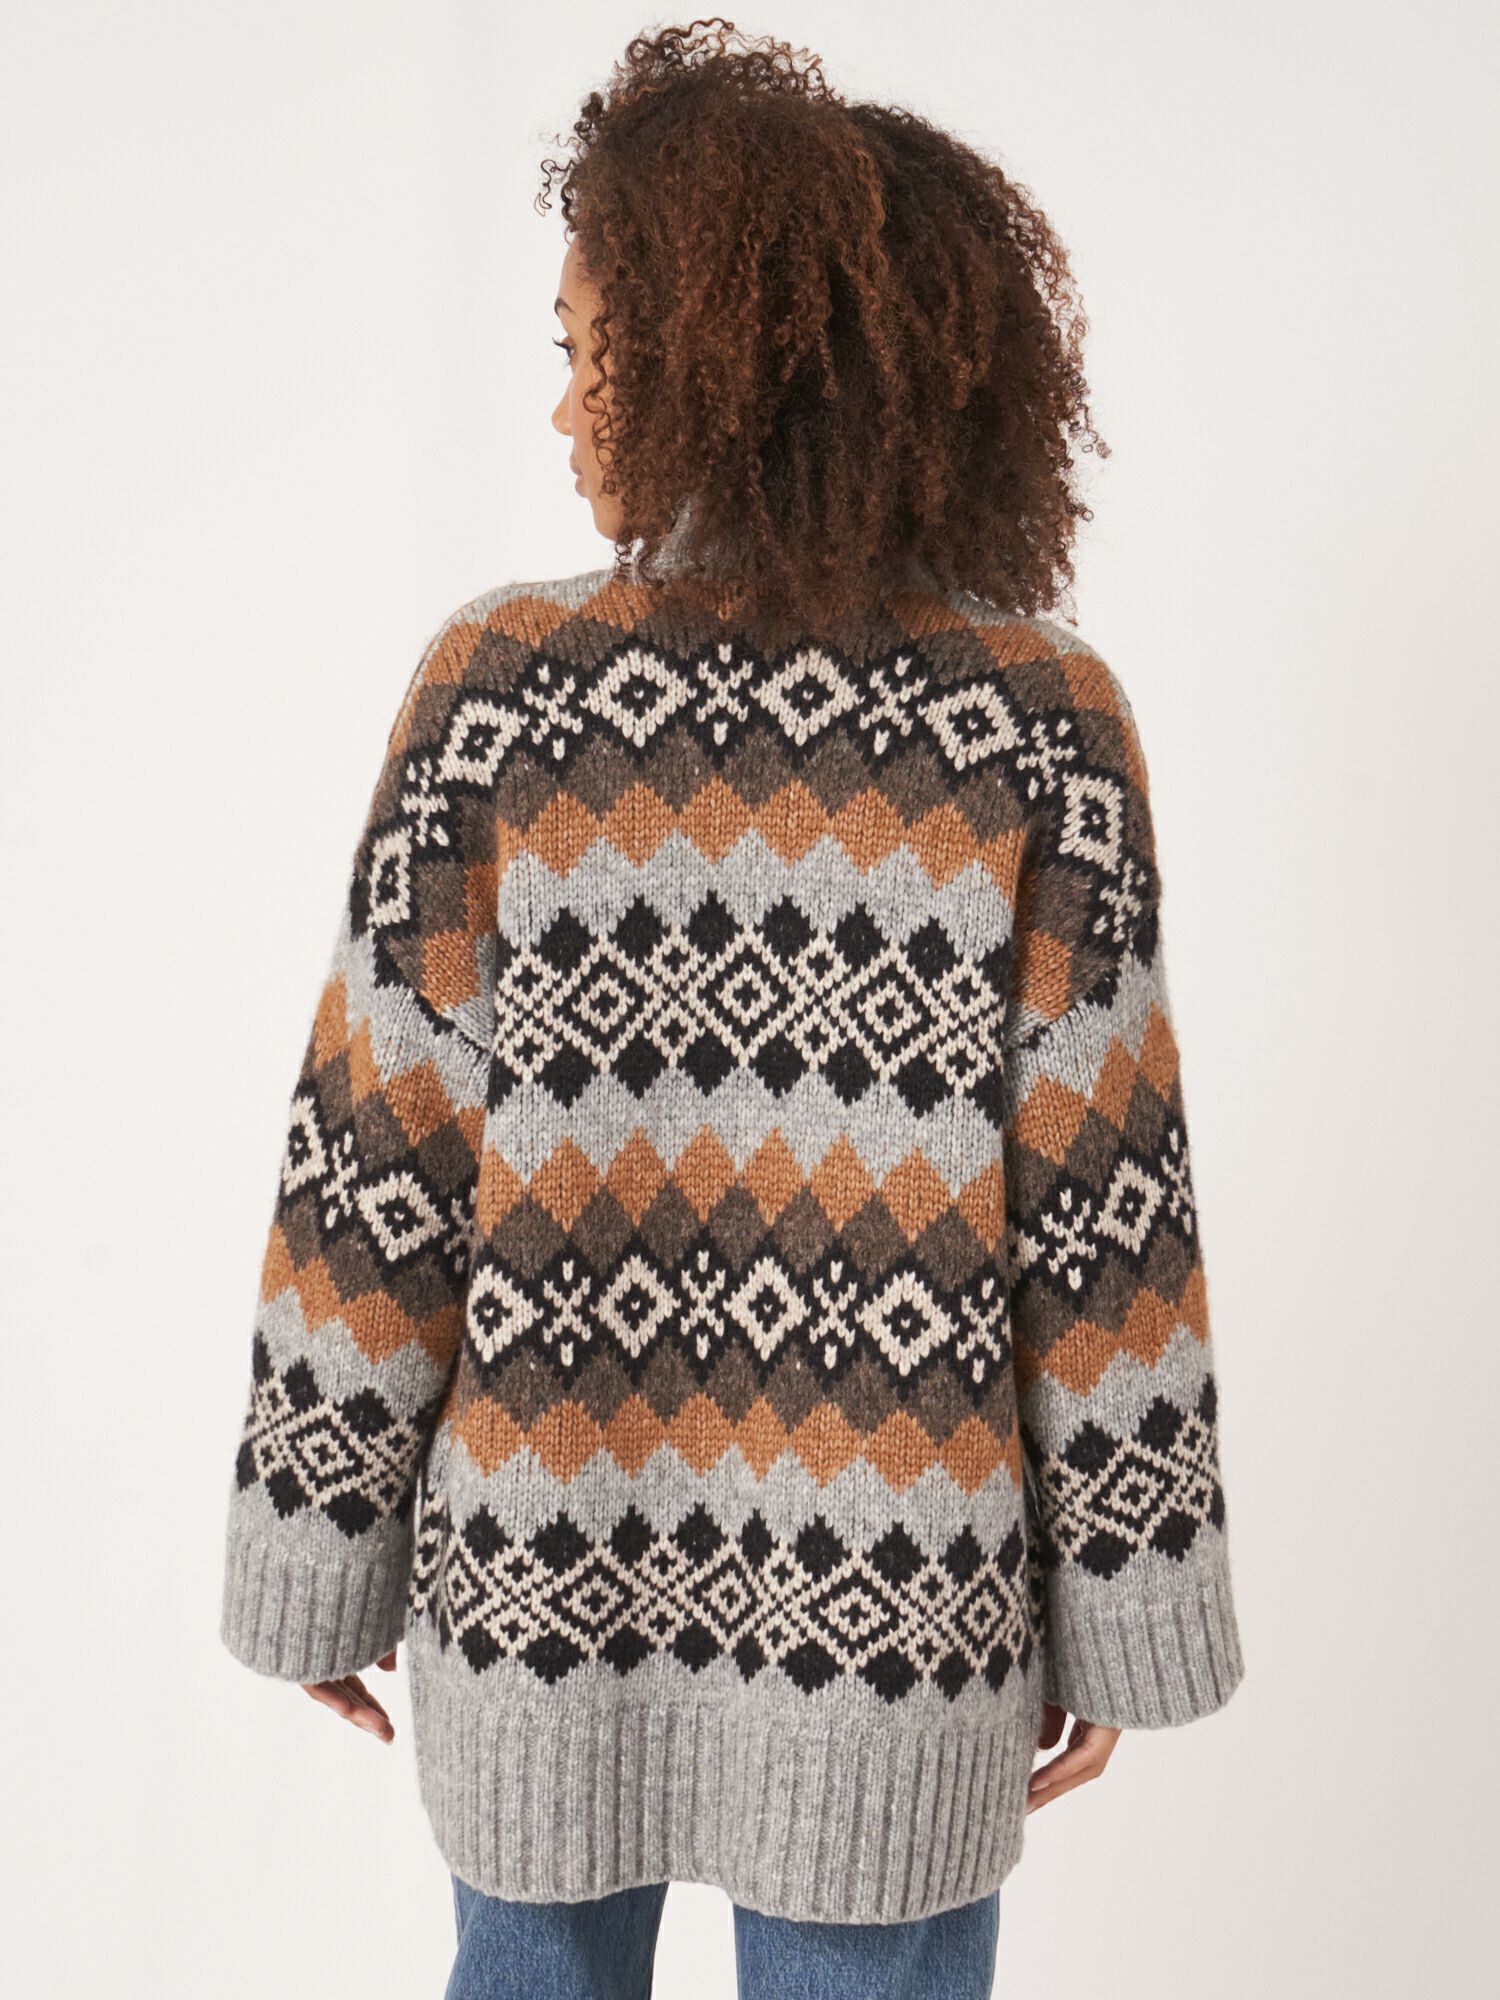 Women's Italian yarn intarsia knit cardigan | REPEAT cashmere